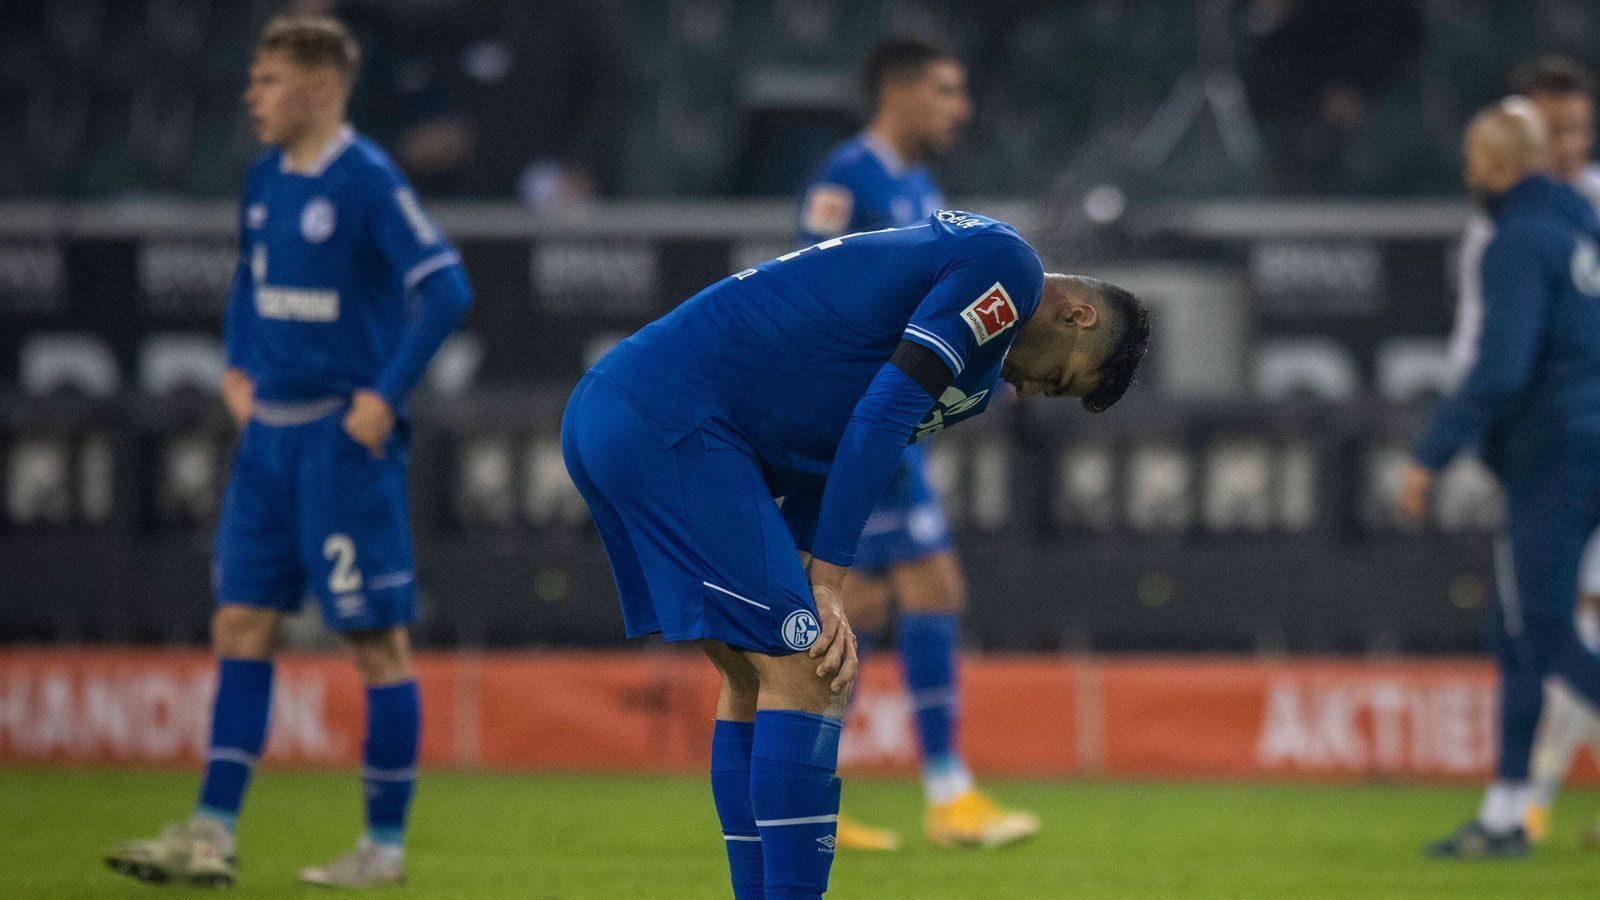 
                <strong>Platz 4: FC Schalke 04 (25 Spiele ohne Sieg*)</strong><br>
                Liga: Bundesliga - Zeitraum: 25. Januar 2020 bis heute* - Im Anschluss abgestiegen? Noch offen - *Serie dauert noch an
              